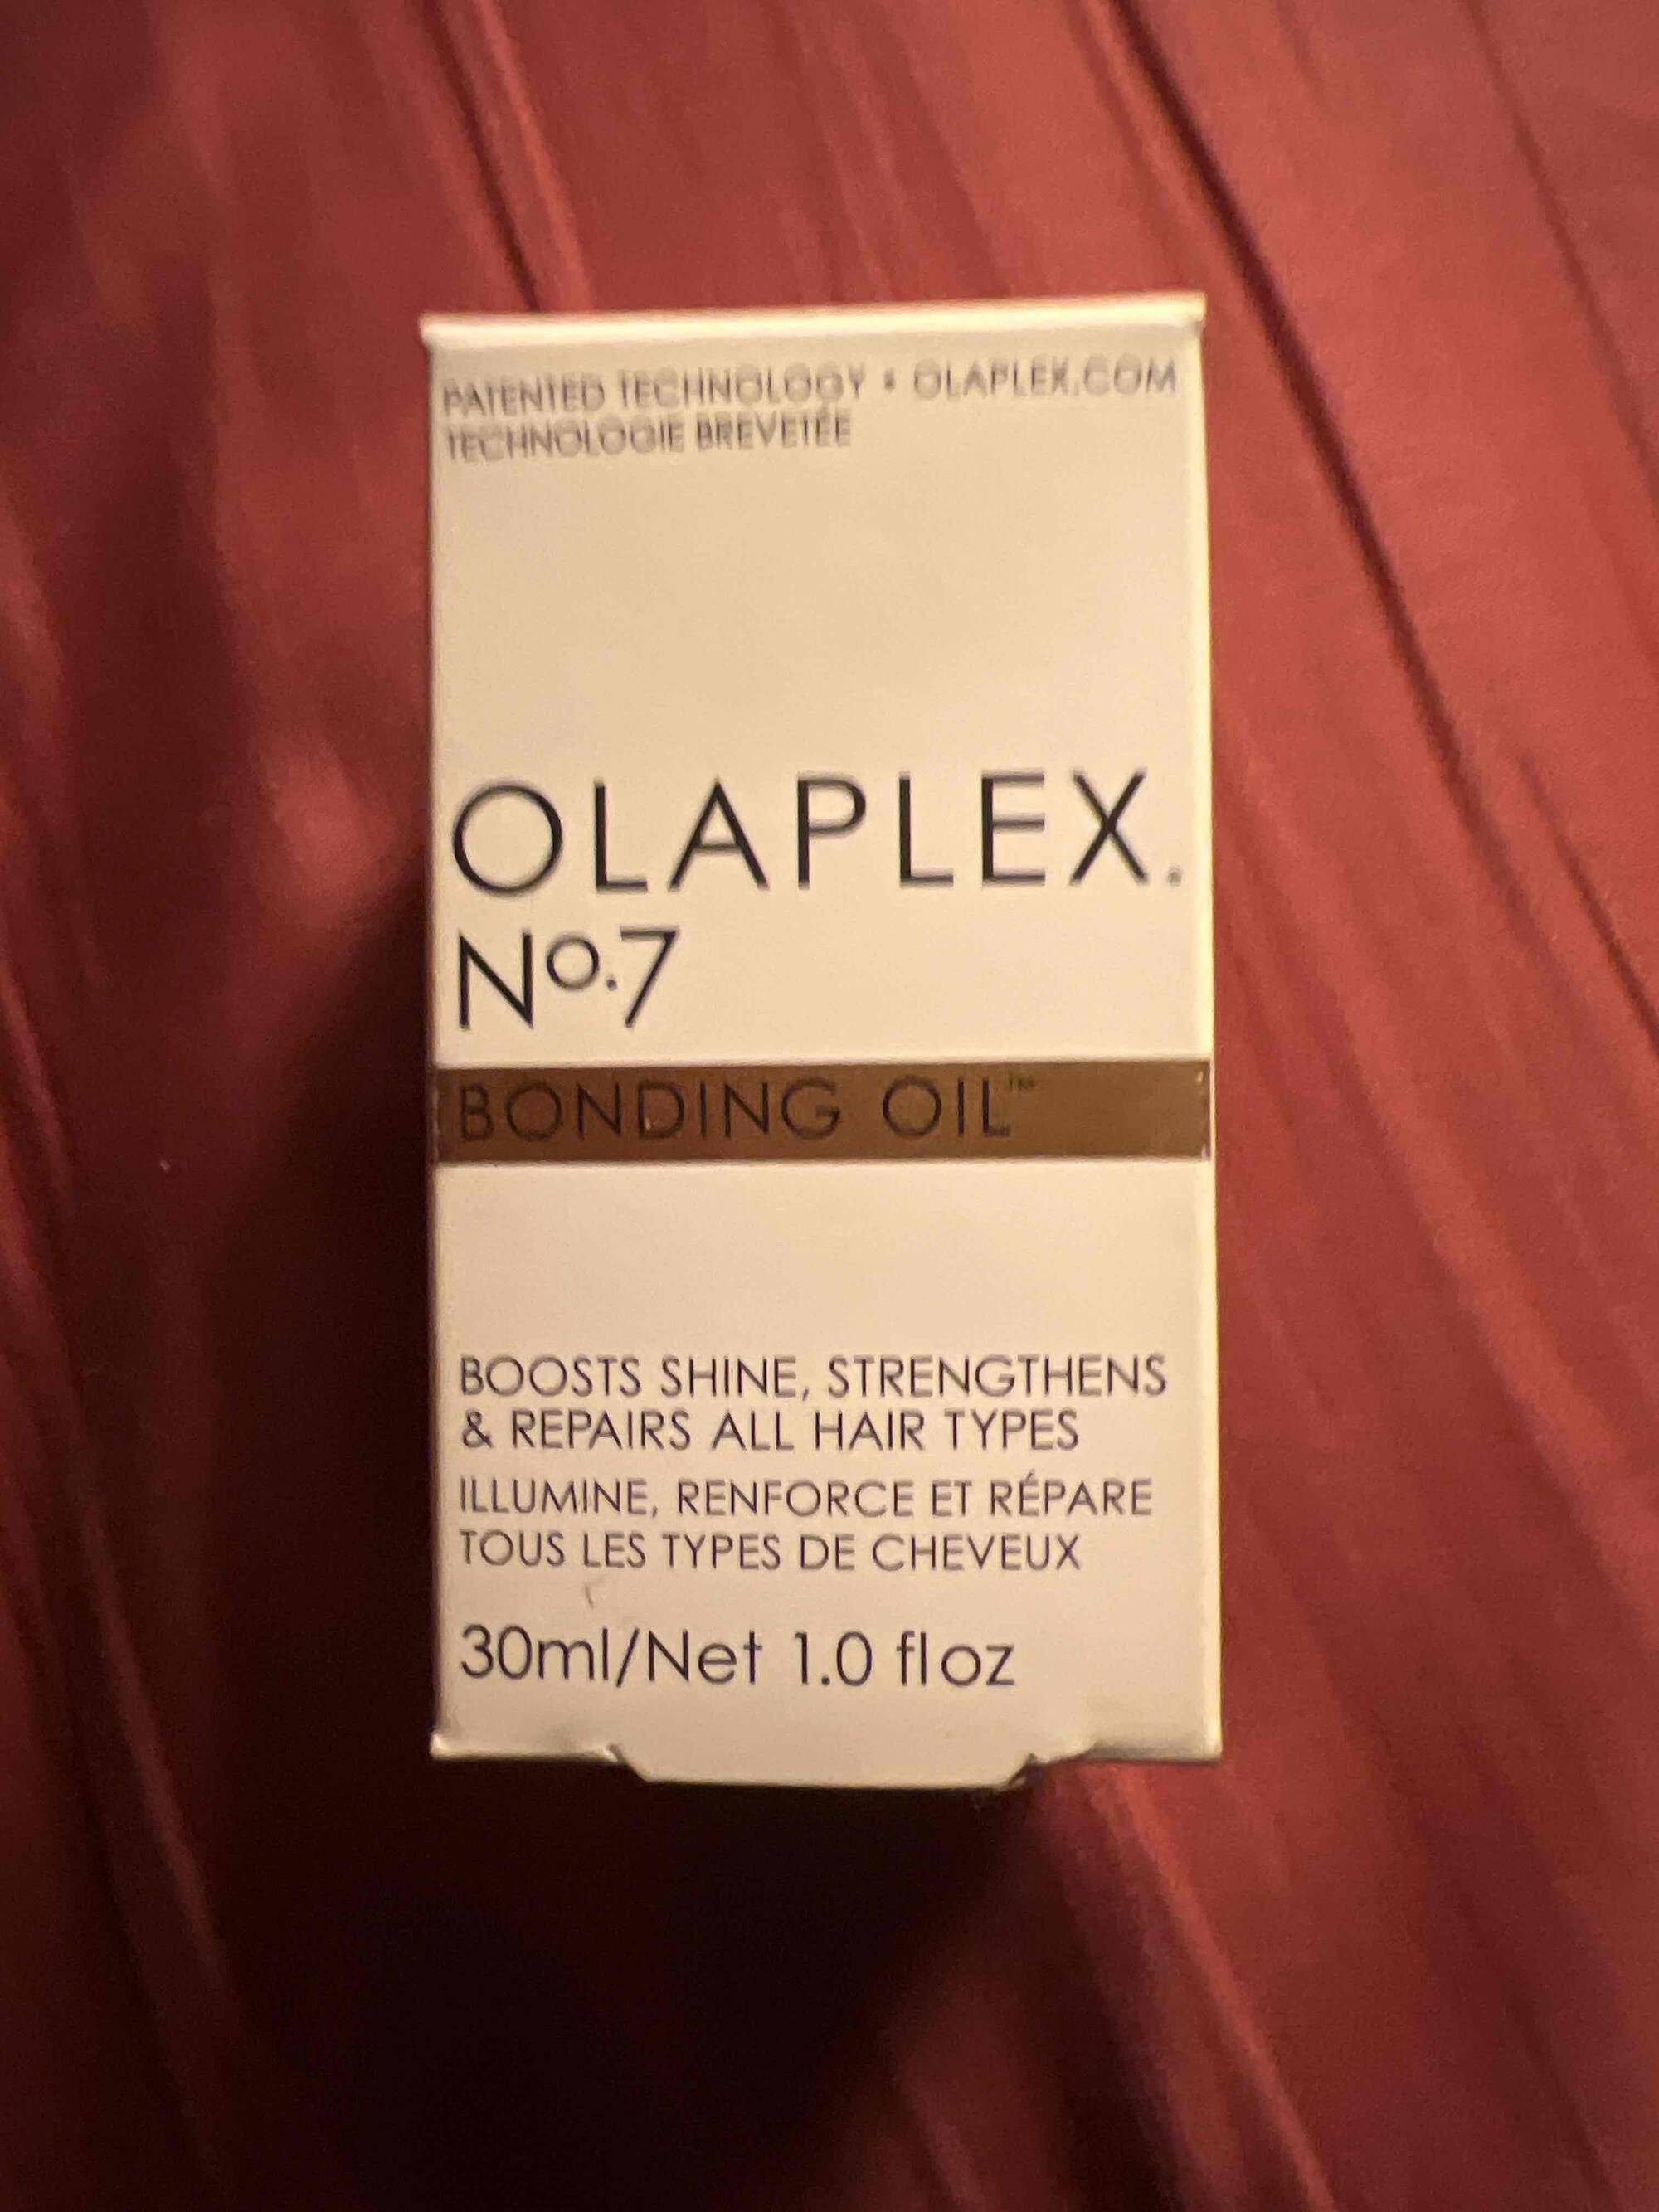 OLAPLEX - Bonding oil